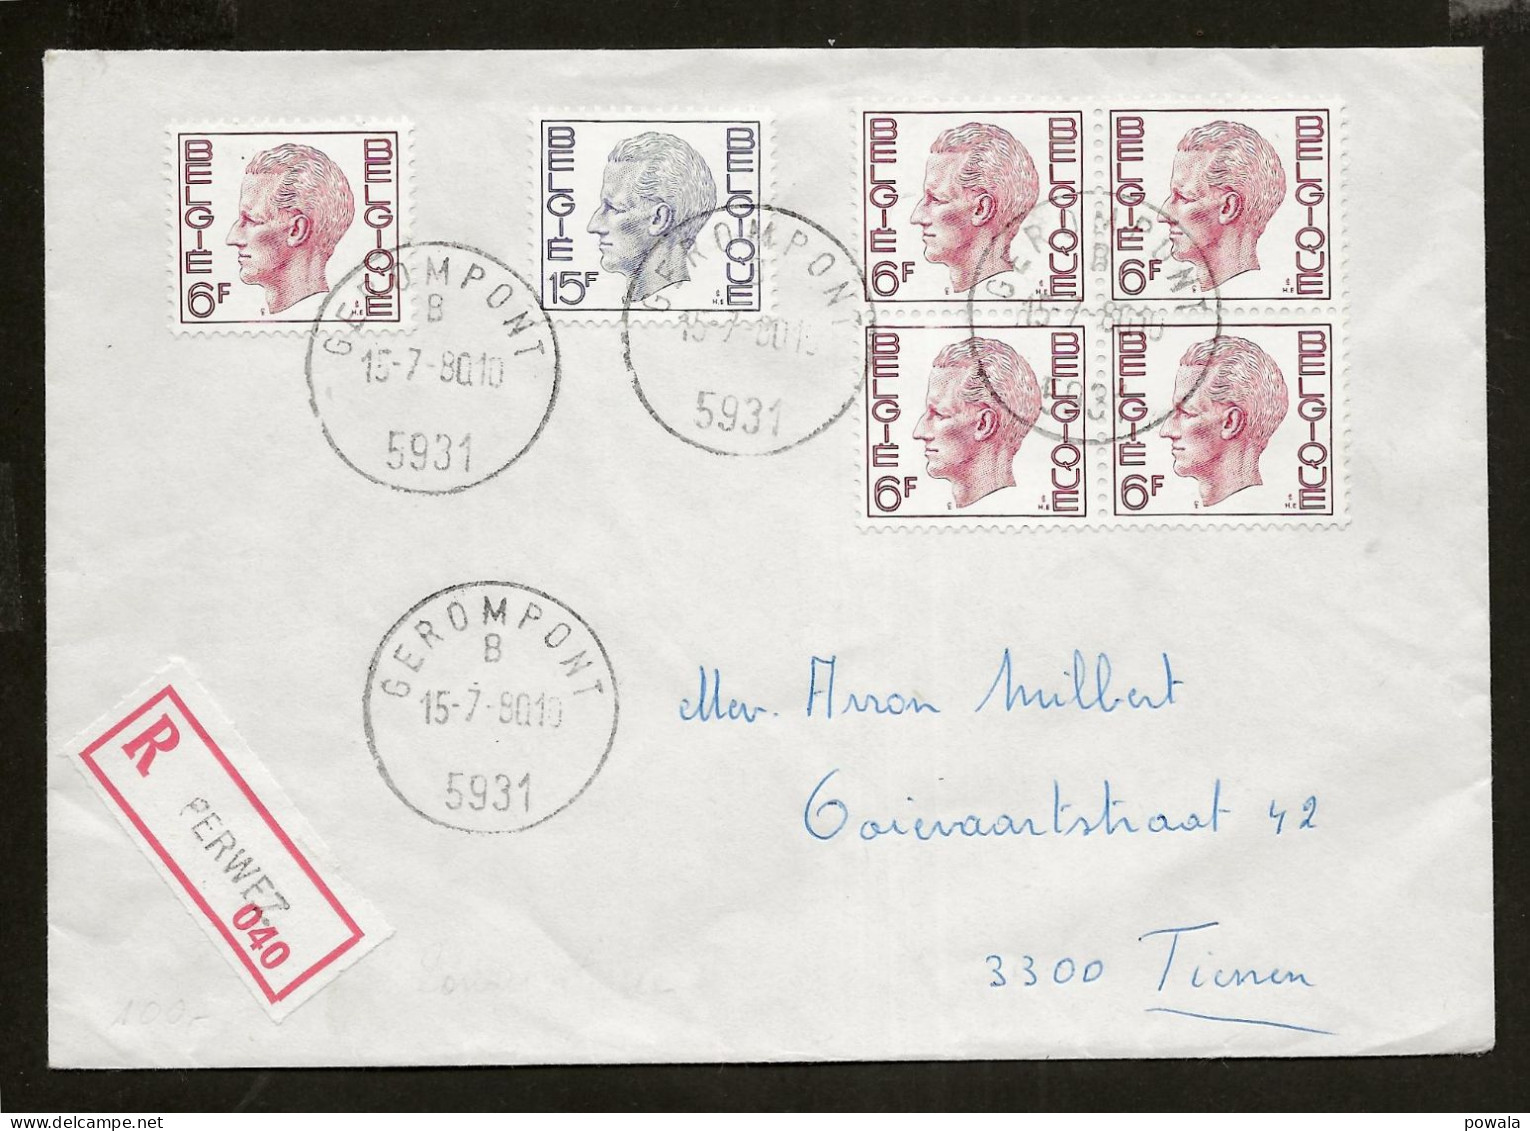 Bestellershalte GEROMPONT 15/7/1980 Stempel Zonder Sterren Letter B Op Recommande - Sternenstempel